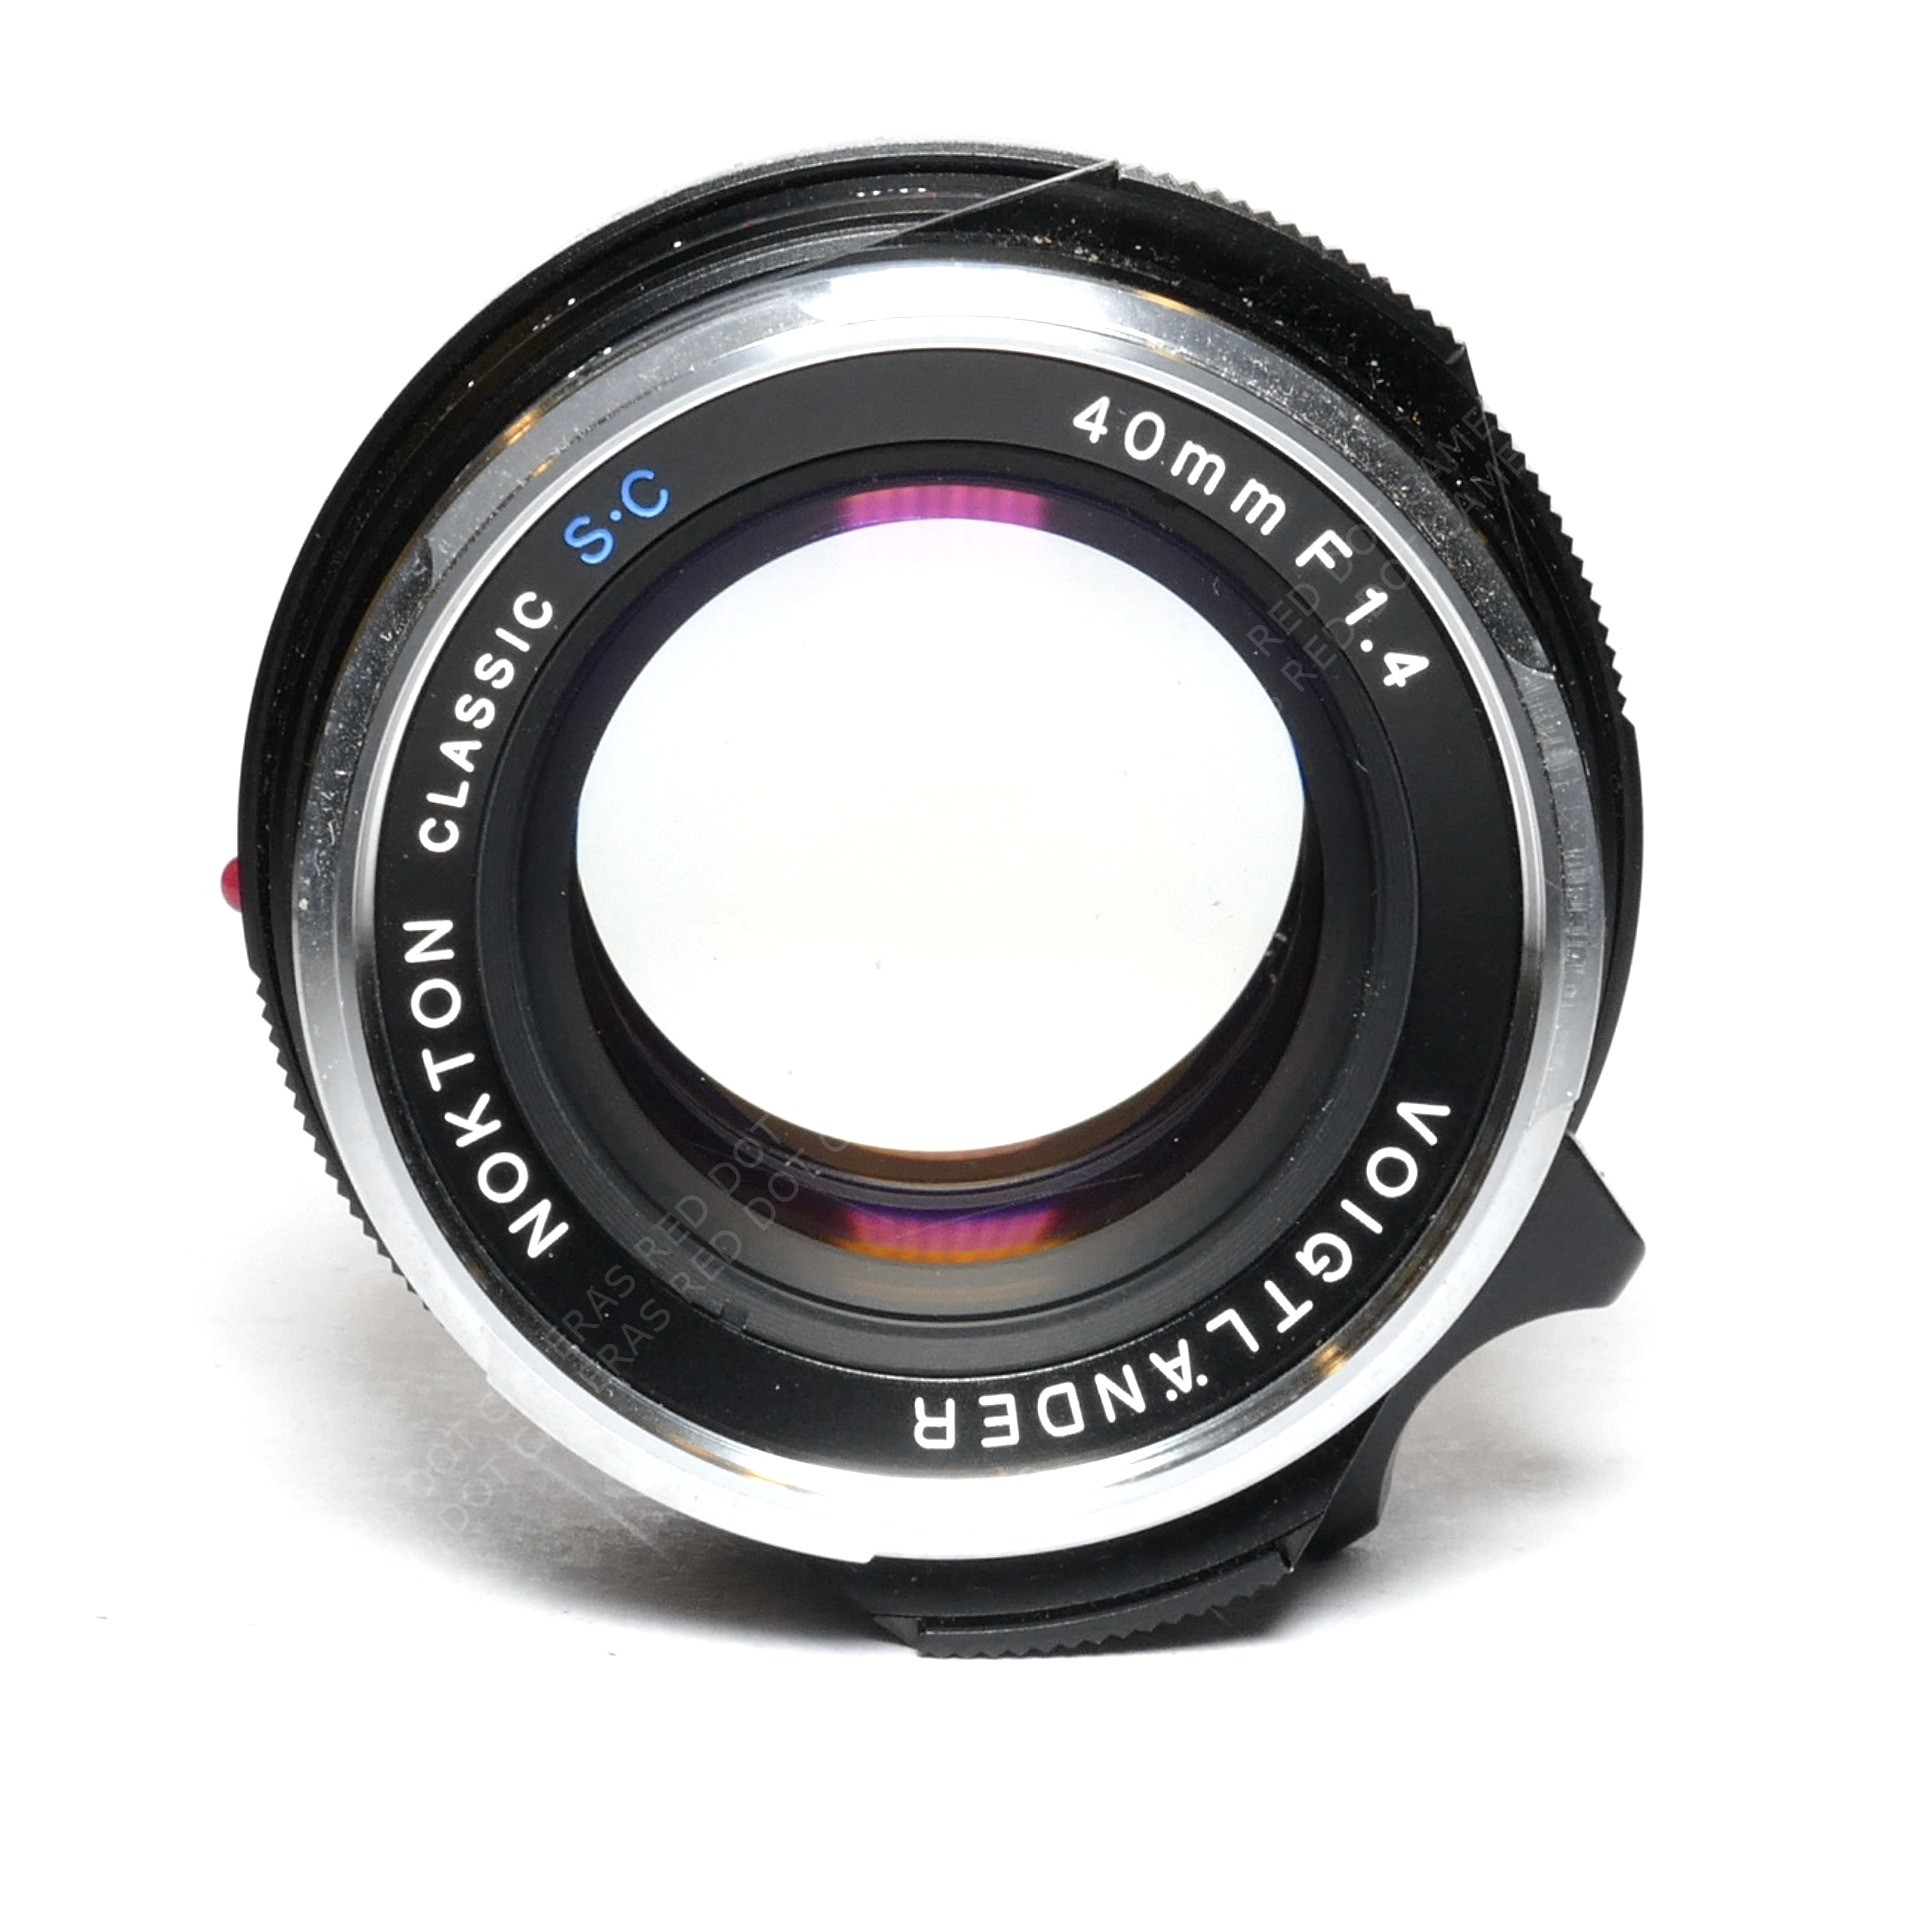 Voigtlander 40mm F1.4 SC VM Mount Nokton-Classic Lens